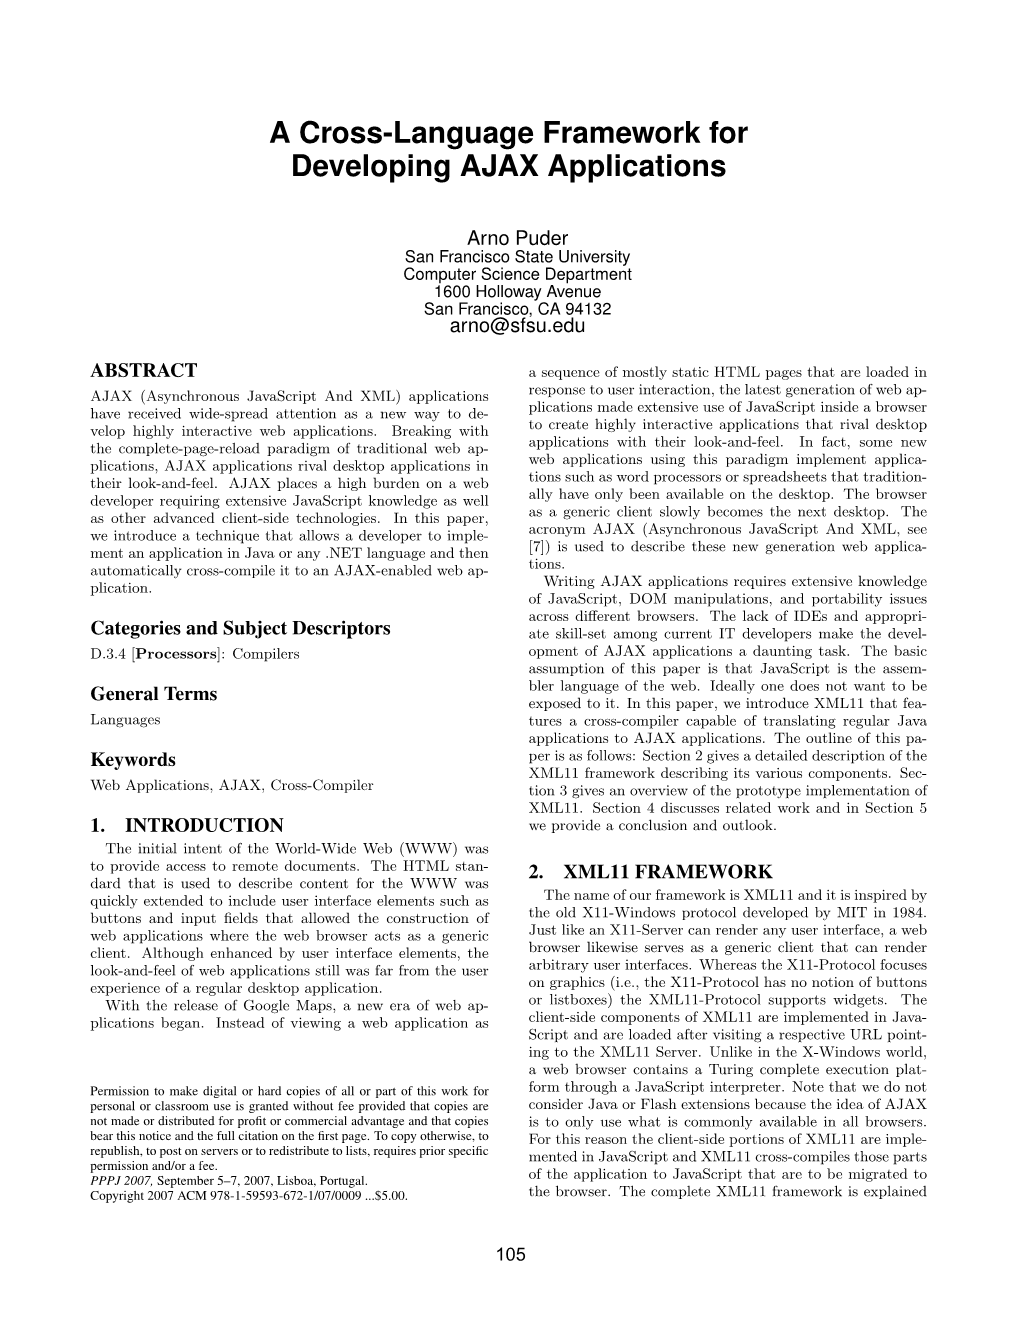 A Cross-Language Framework for Developing AJAX Applications